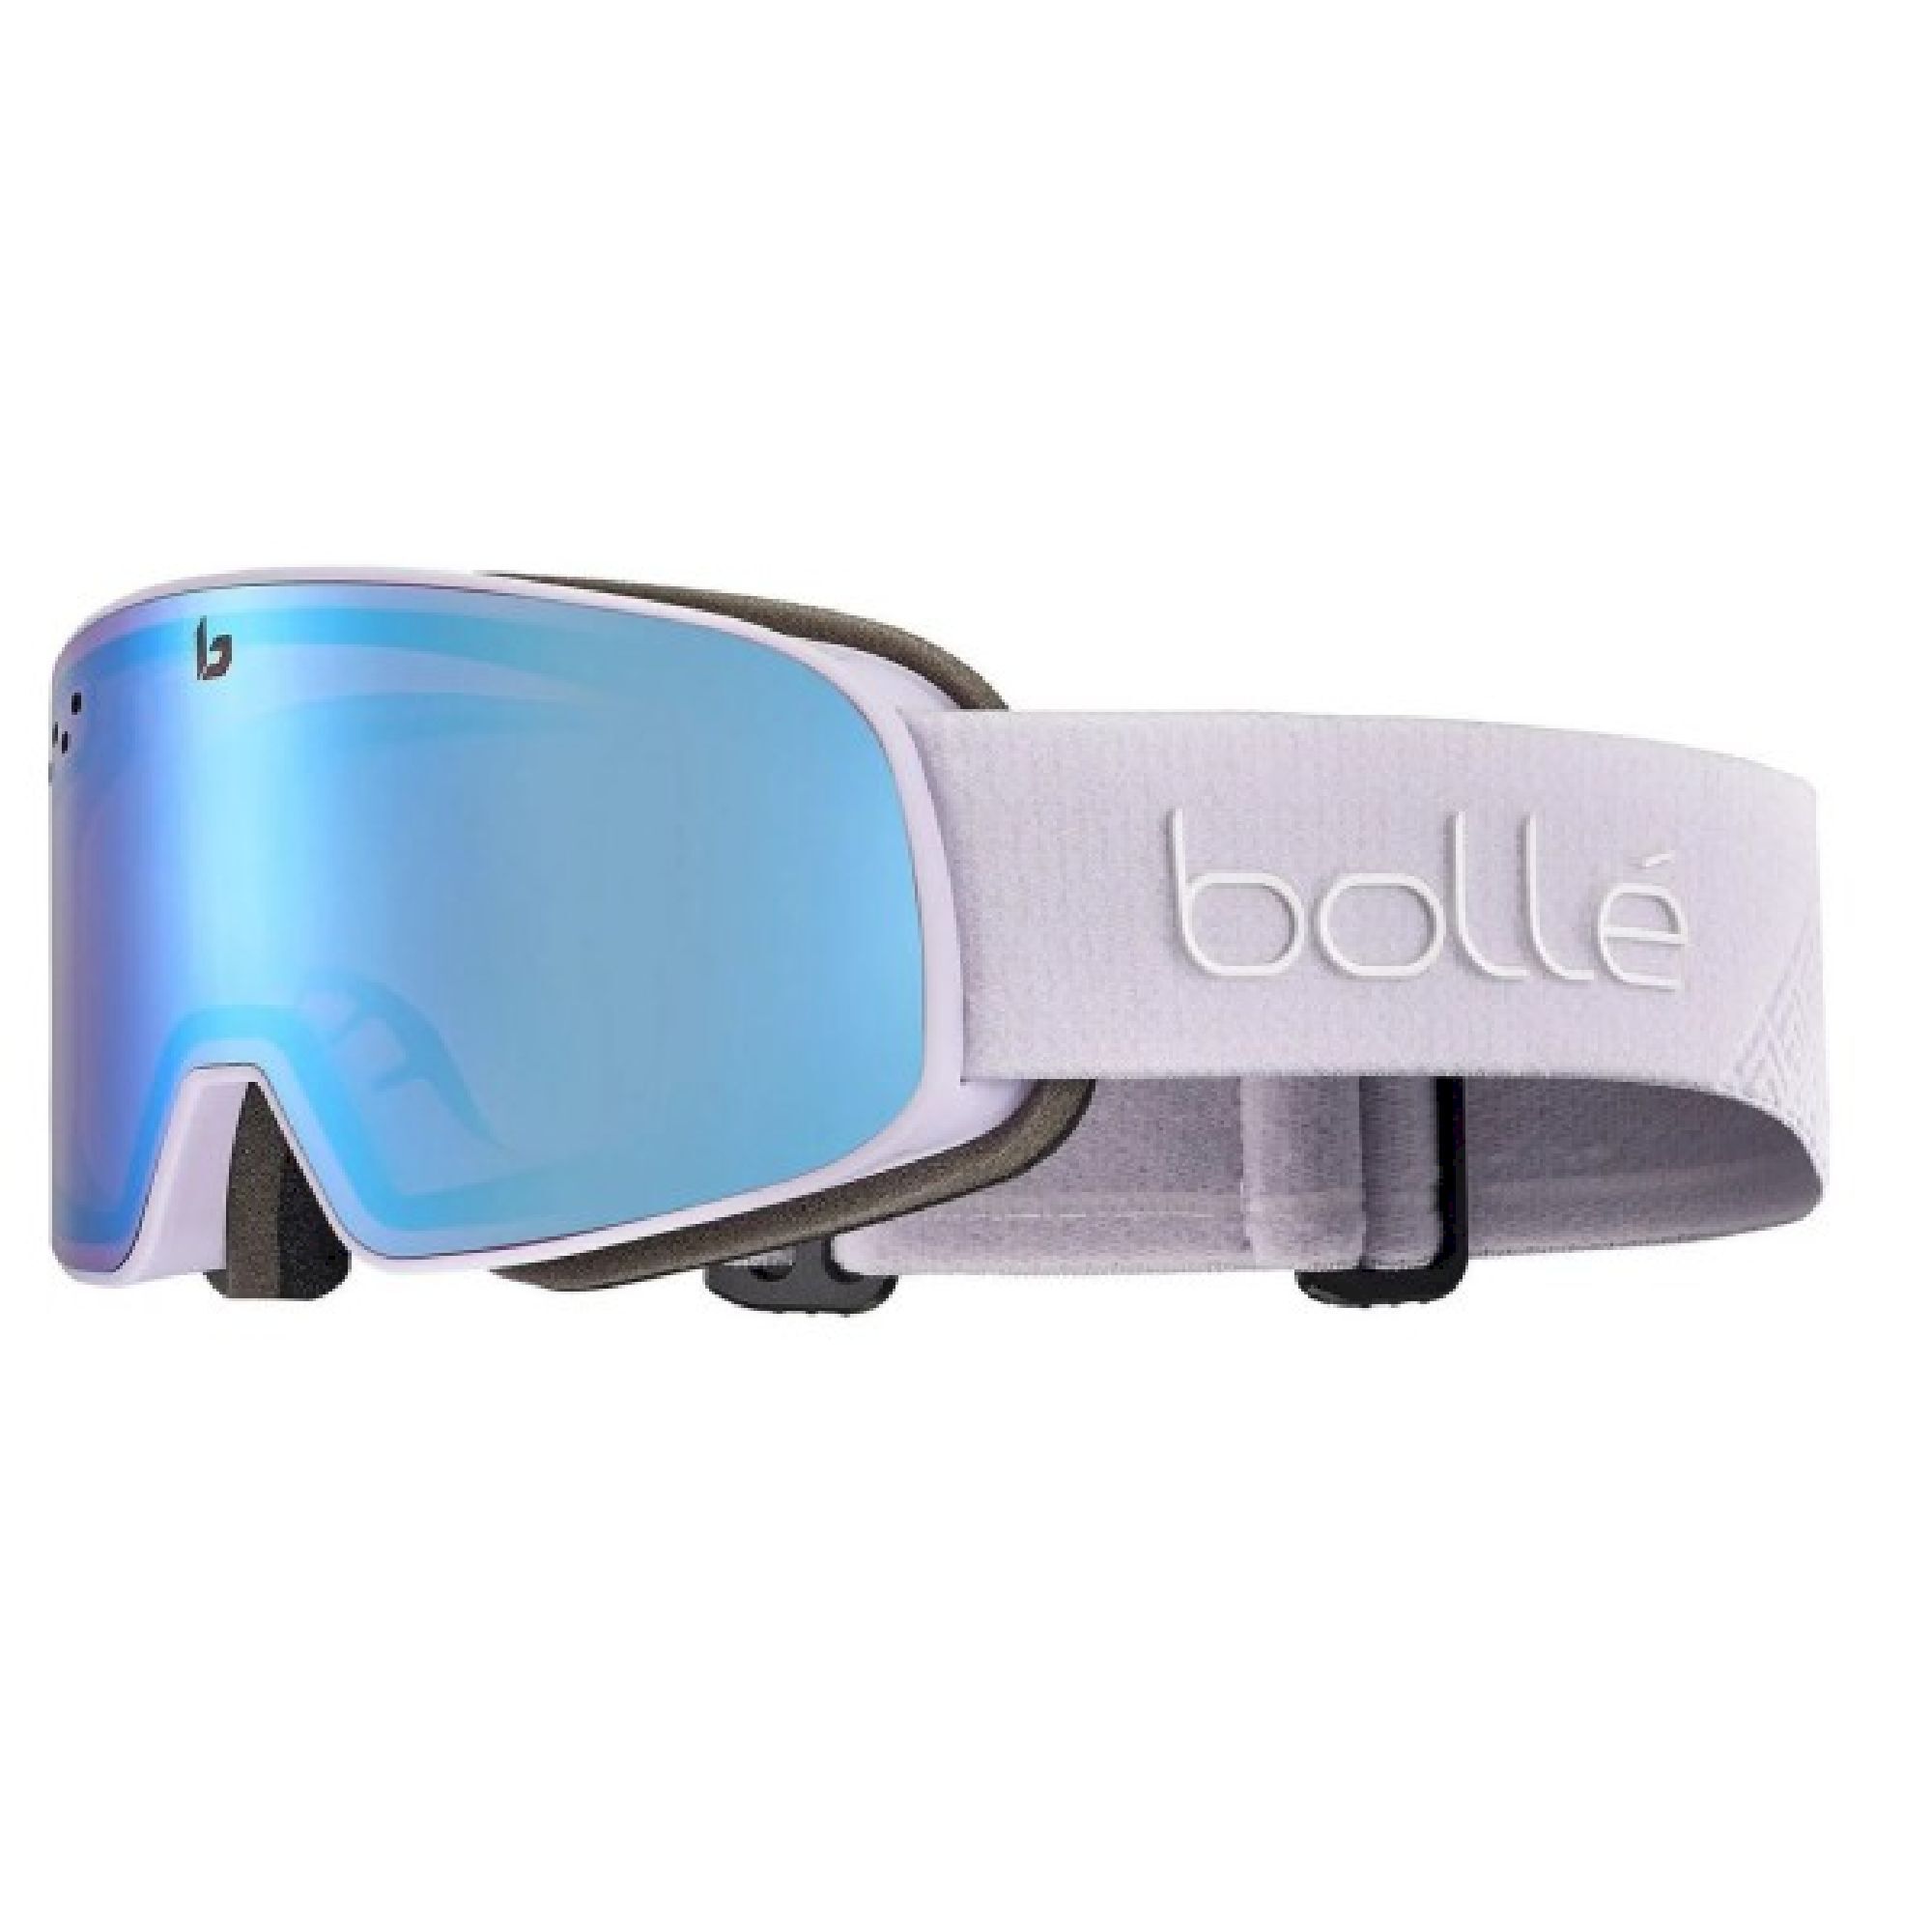 Bollé Nevada Small - Ski goggles